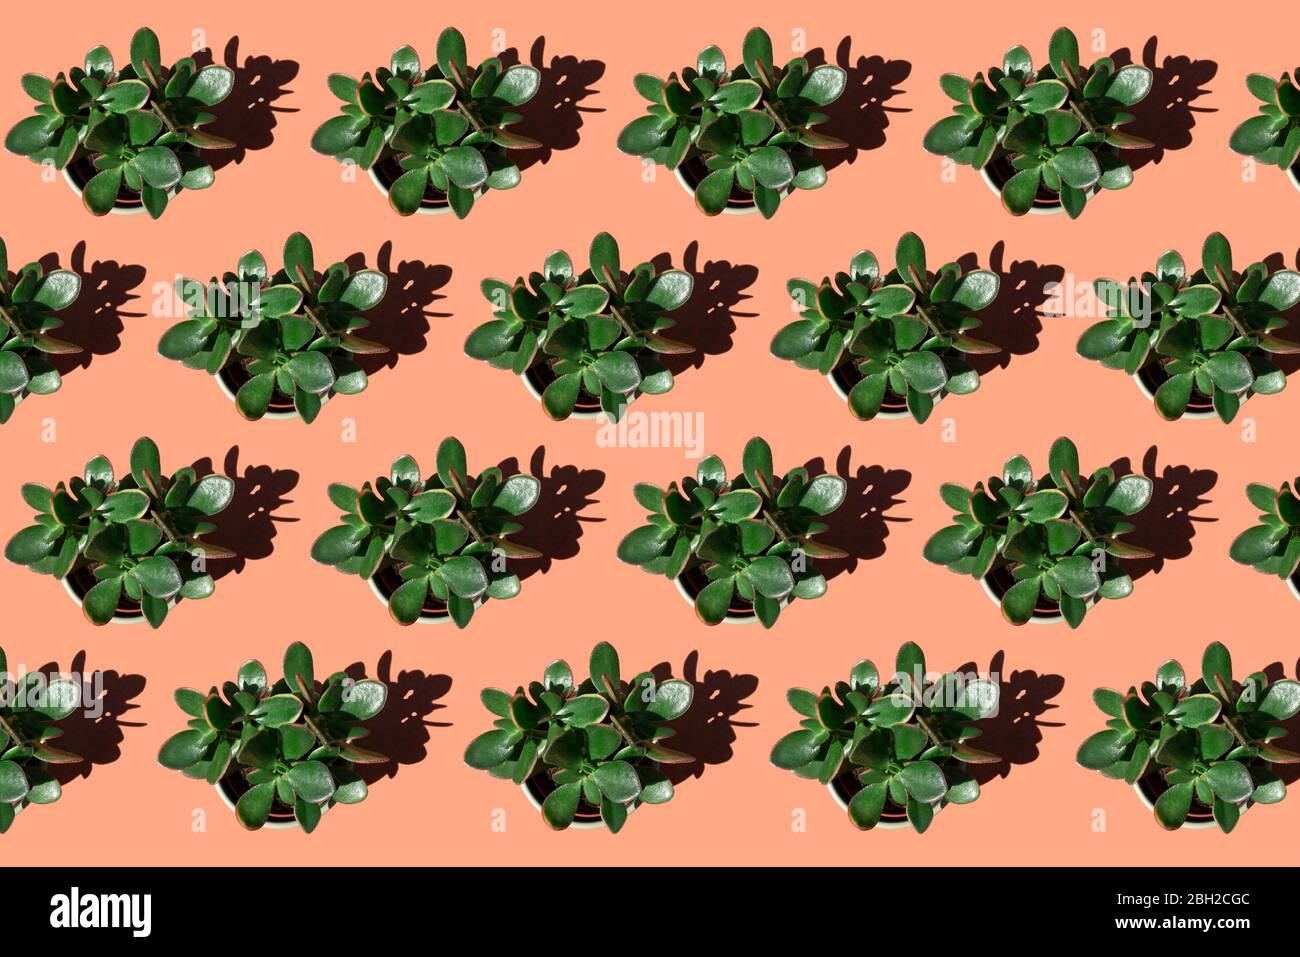 Rows of potted jade plants (Crassula ovata) Stock Photo